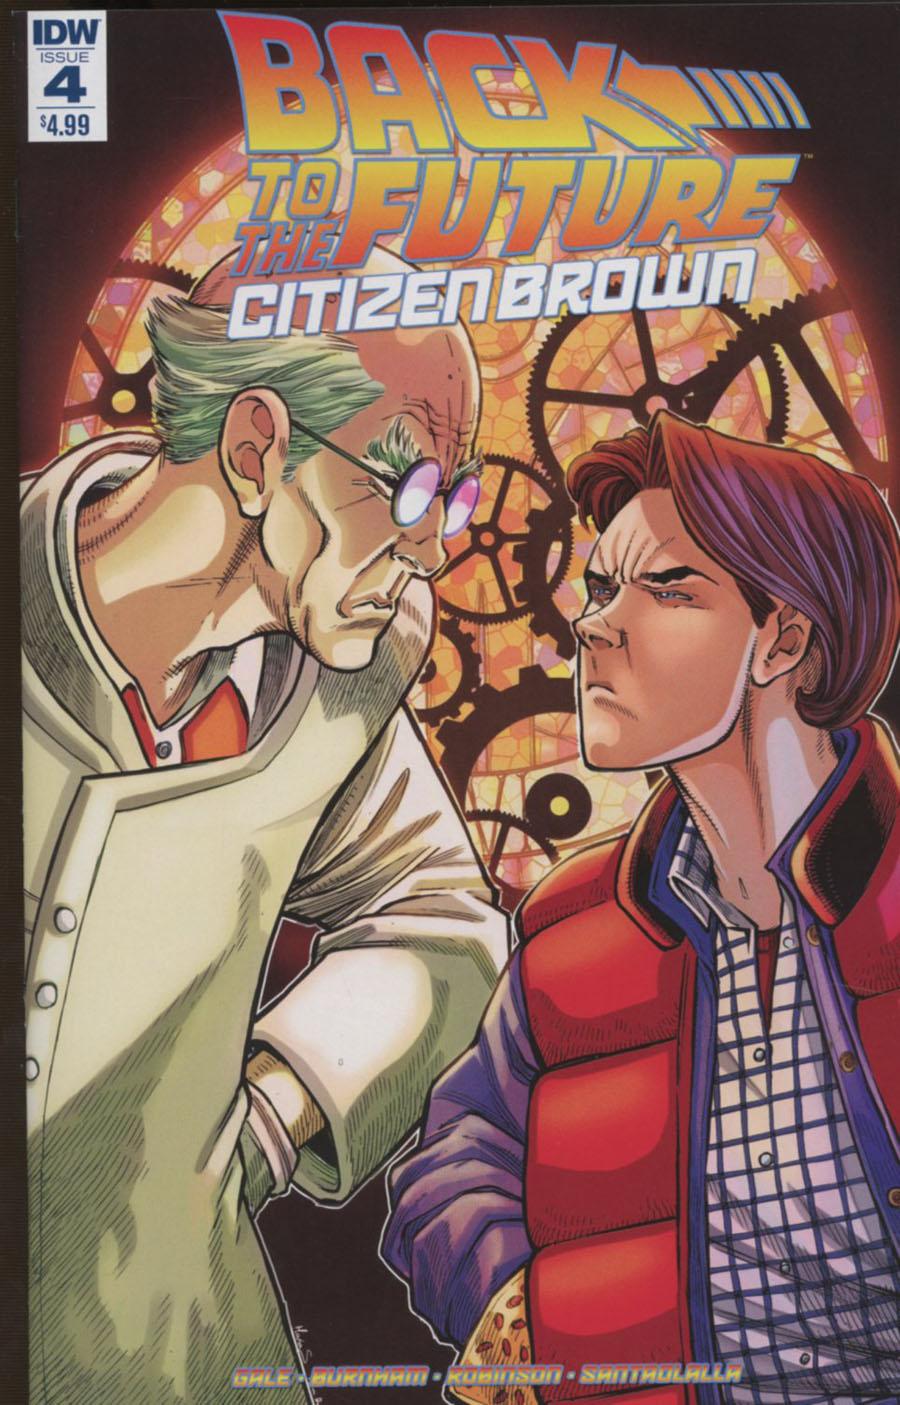 Back To The Future Citizen Brown Vol. 1 #4